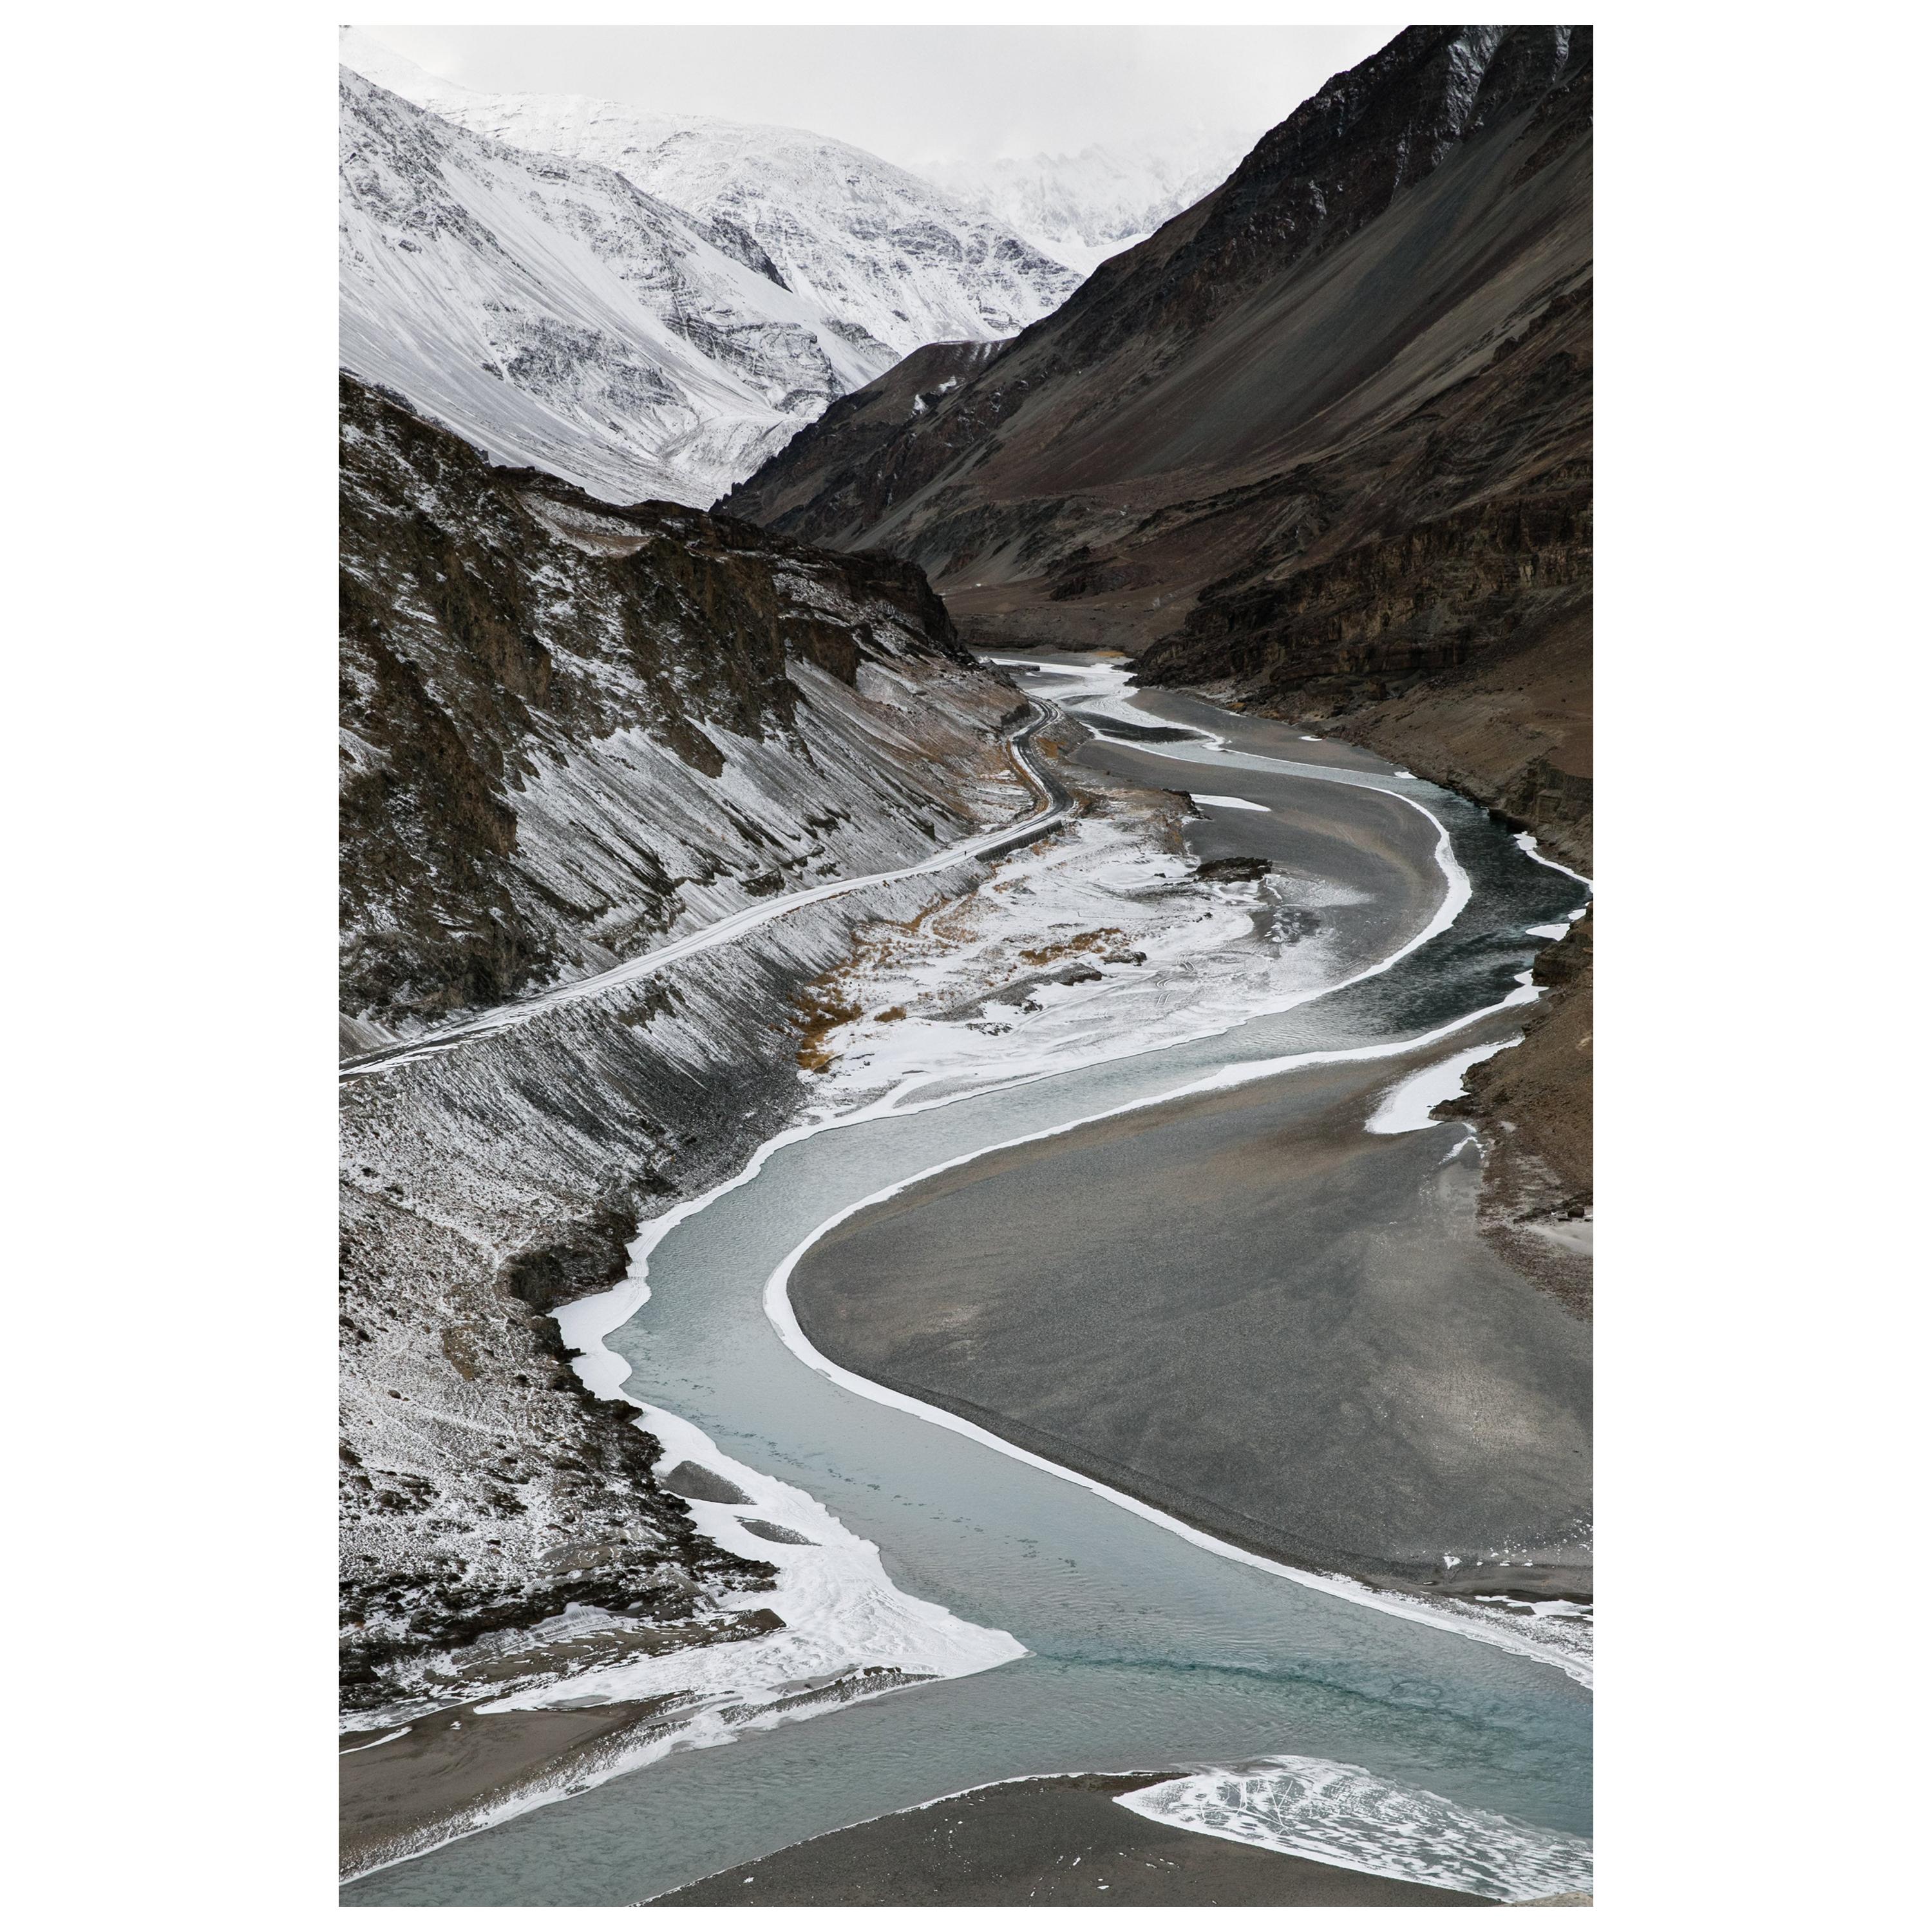 “Ladakh” Photography, 2018, by Brazilian photographer Chico Kfouri